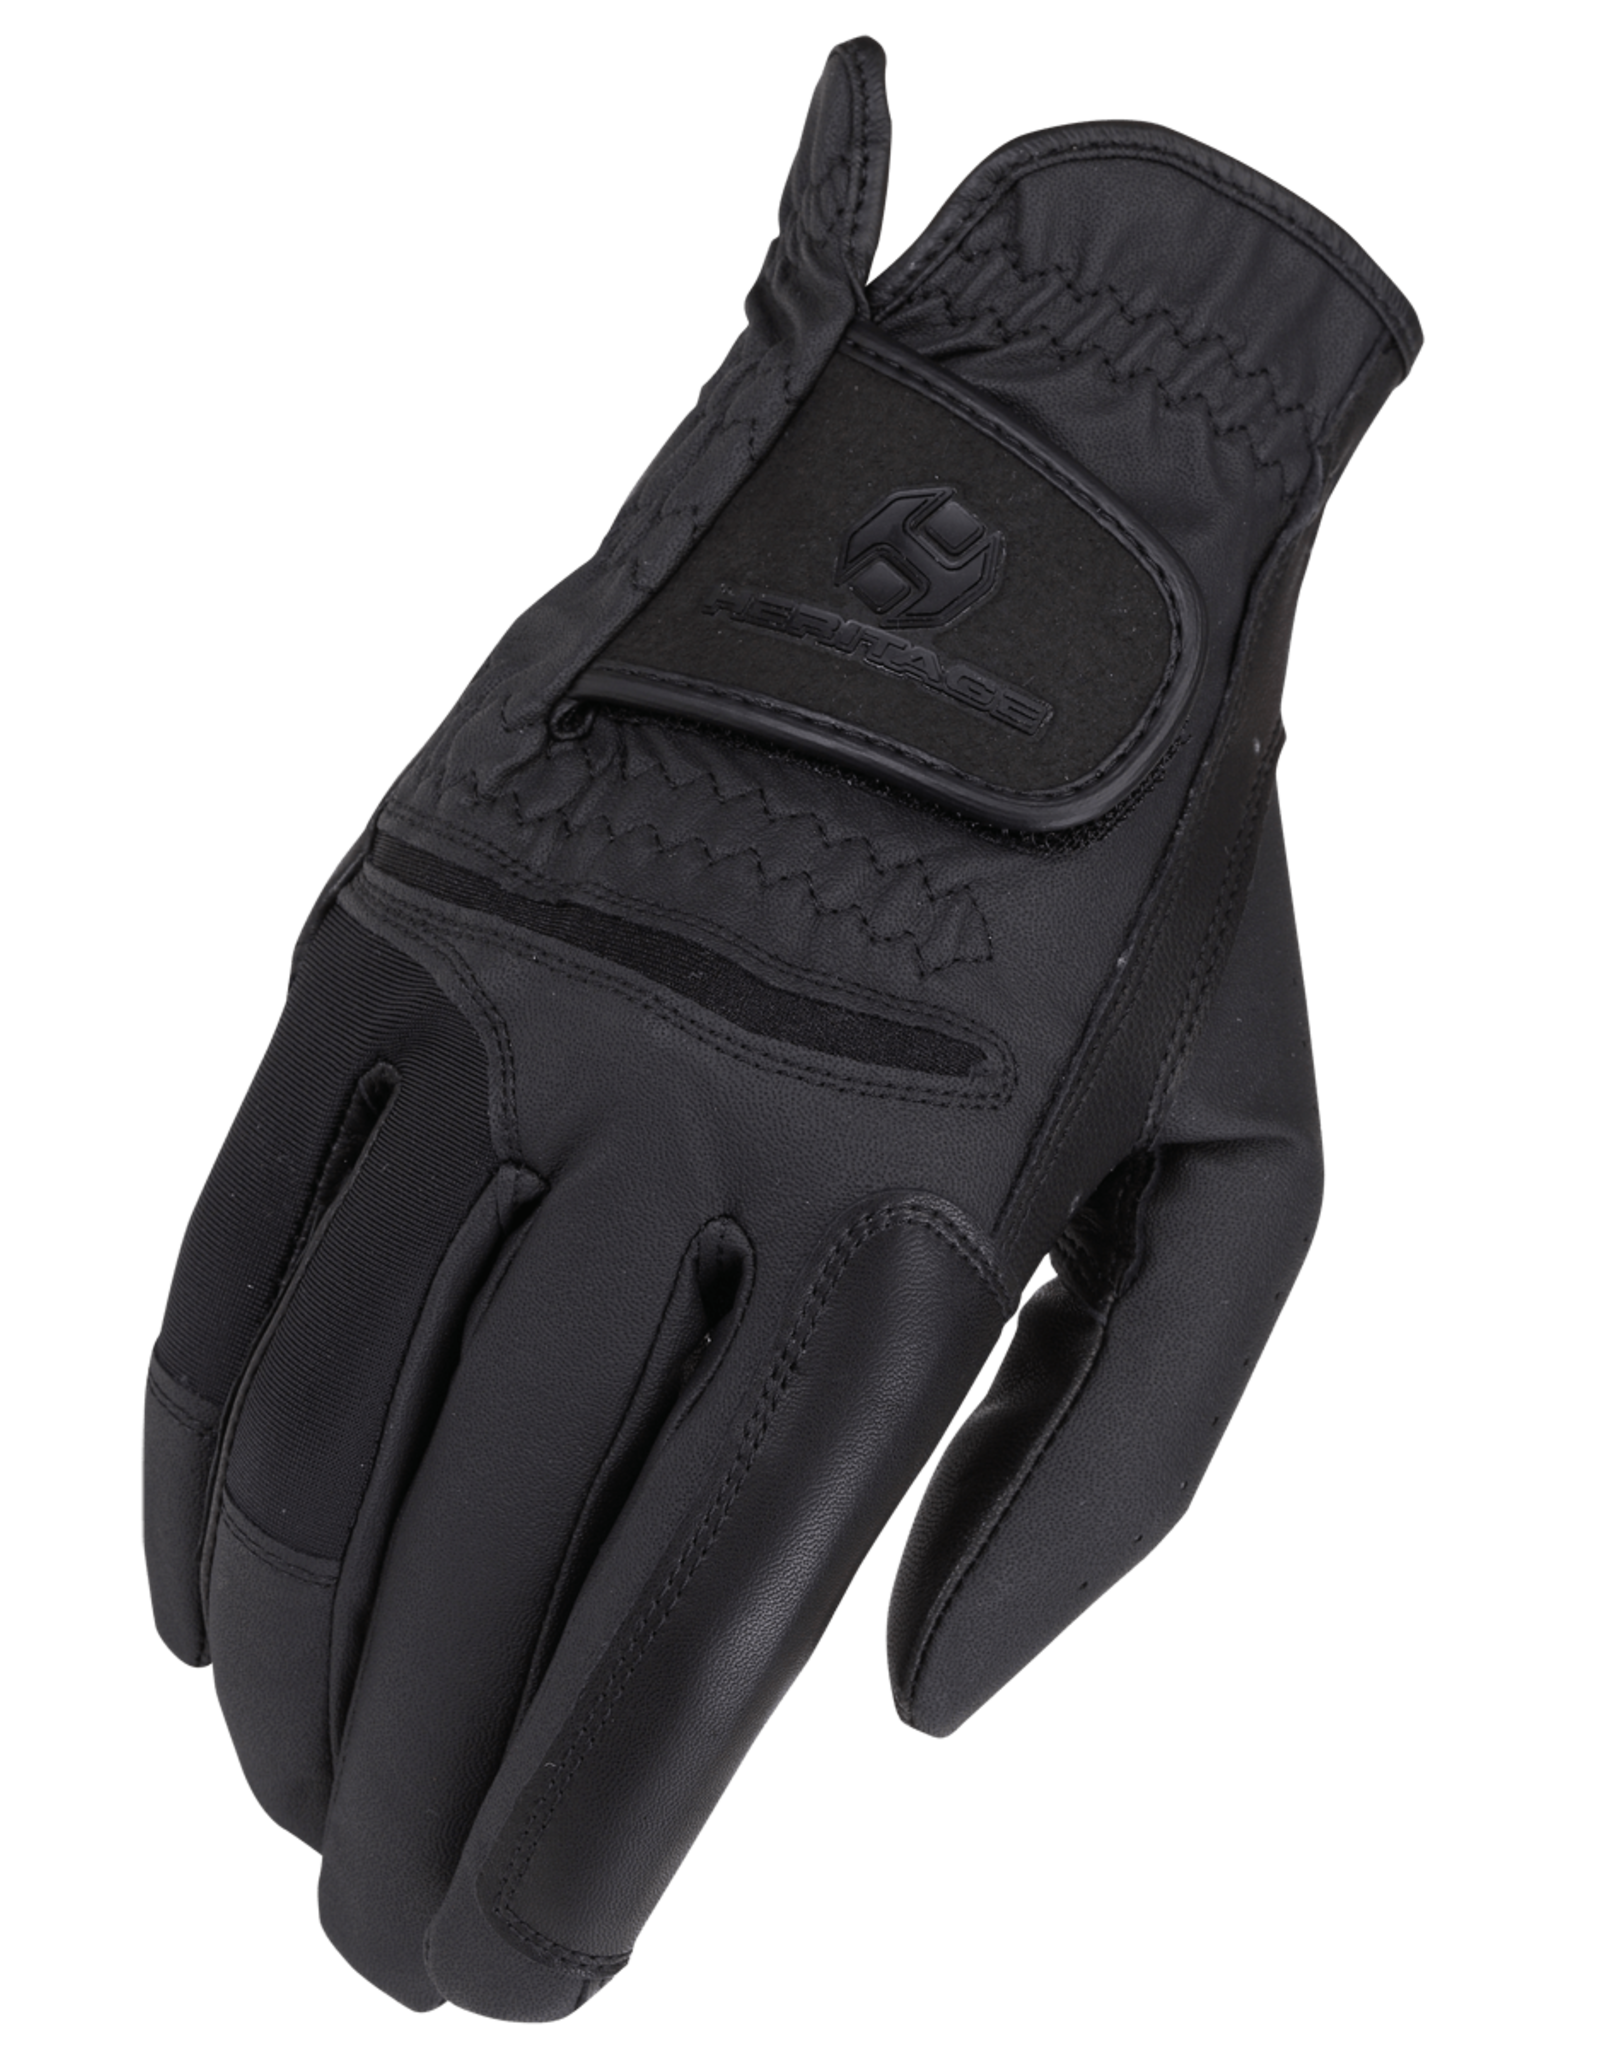 Gloves Heritage Pro-Comp